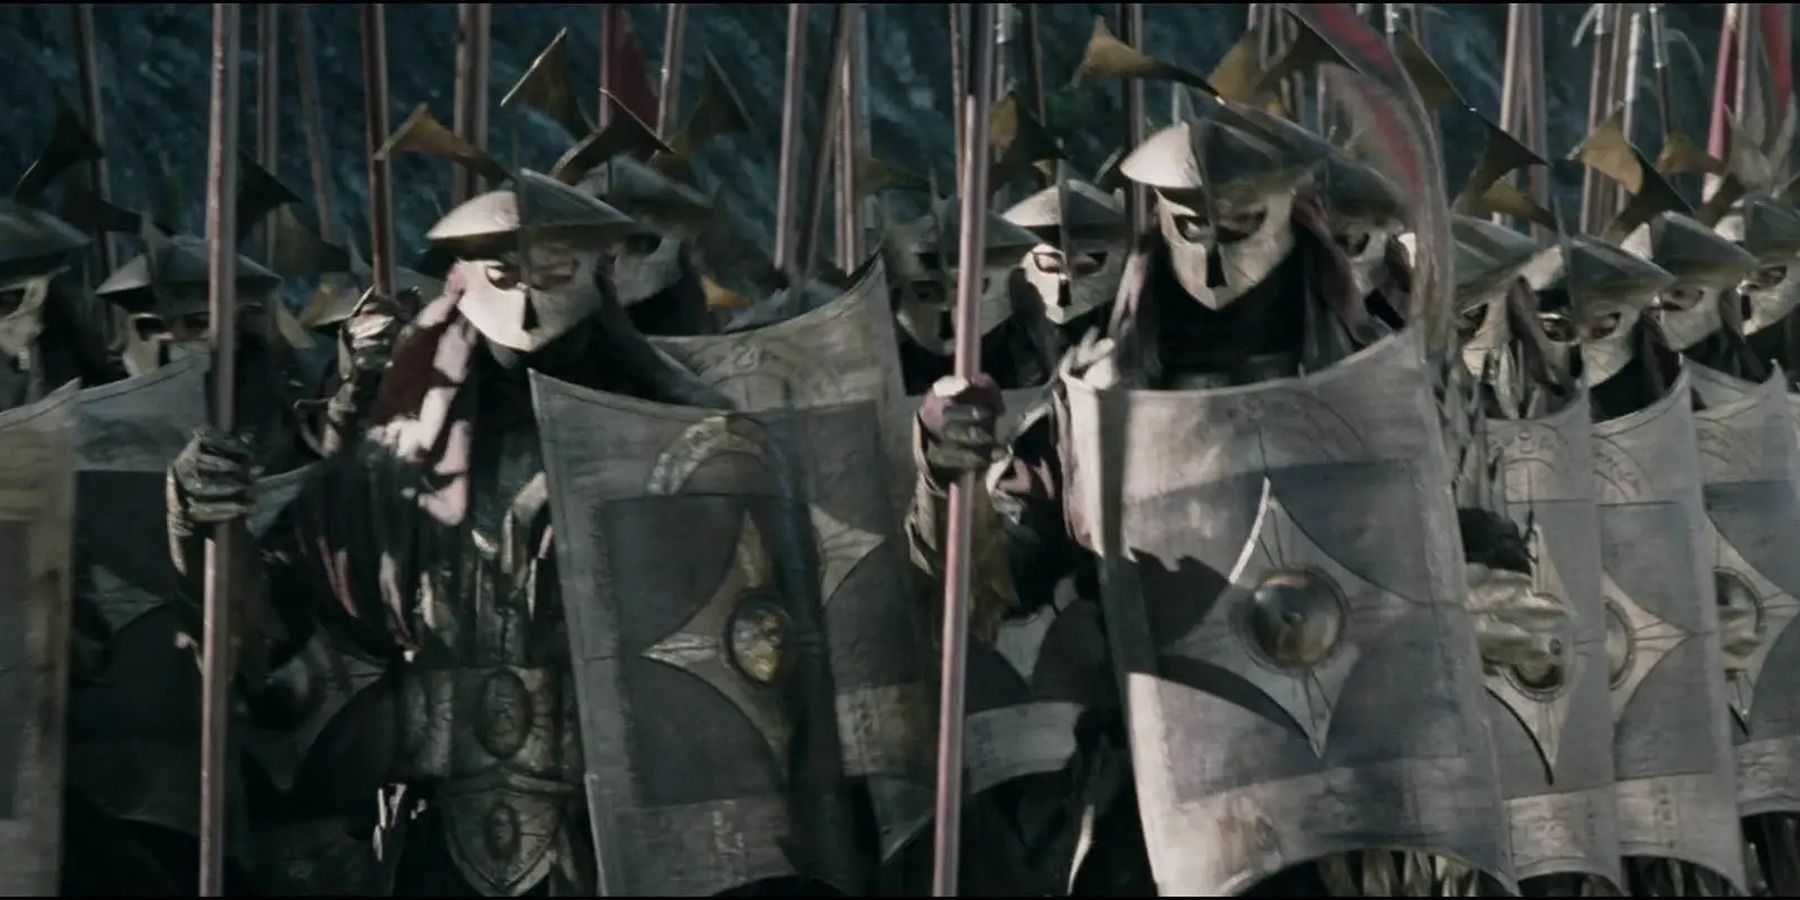 lotr gondor-wainrider wars